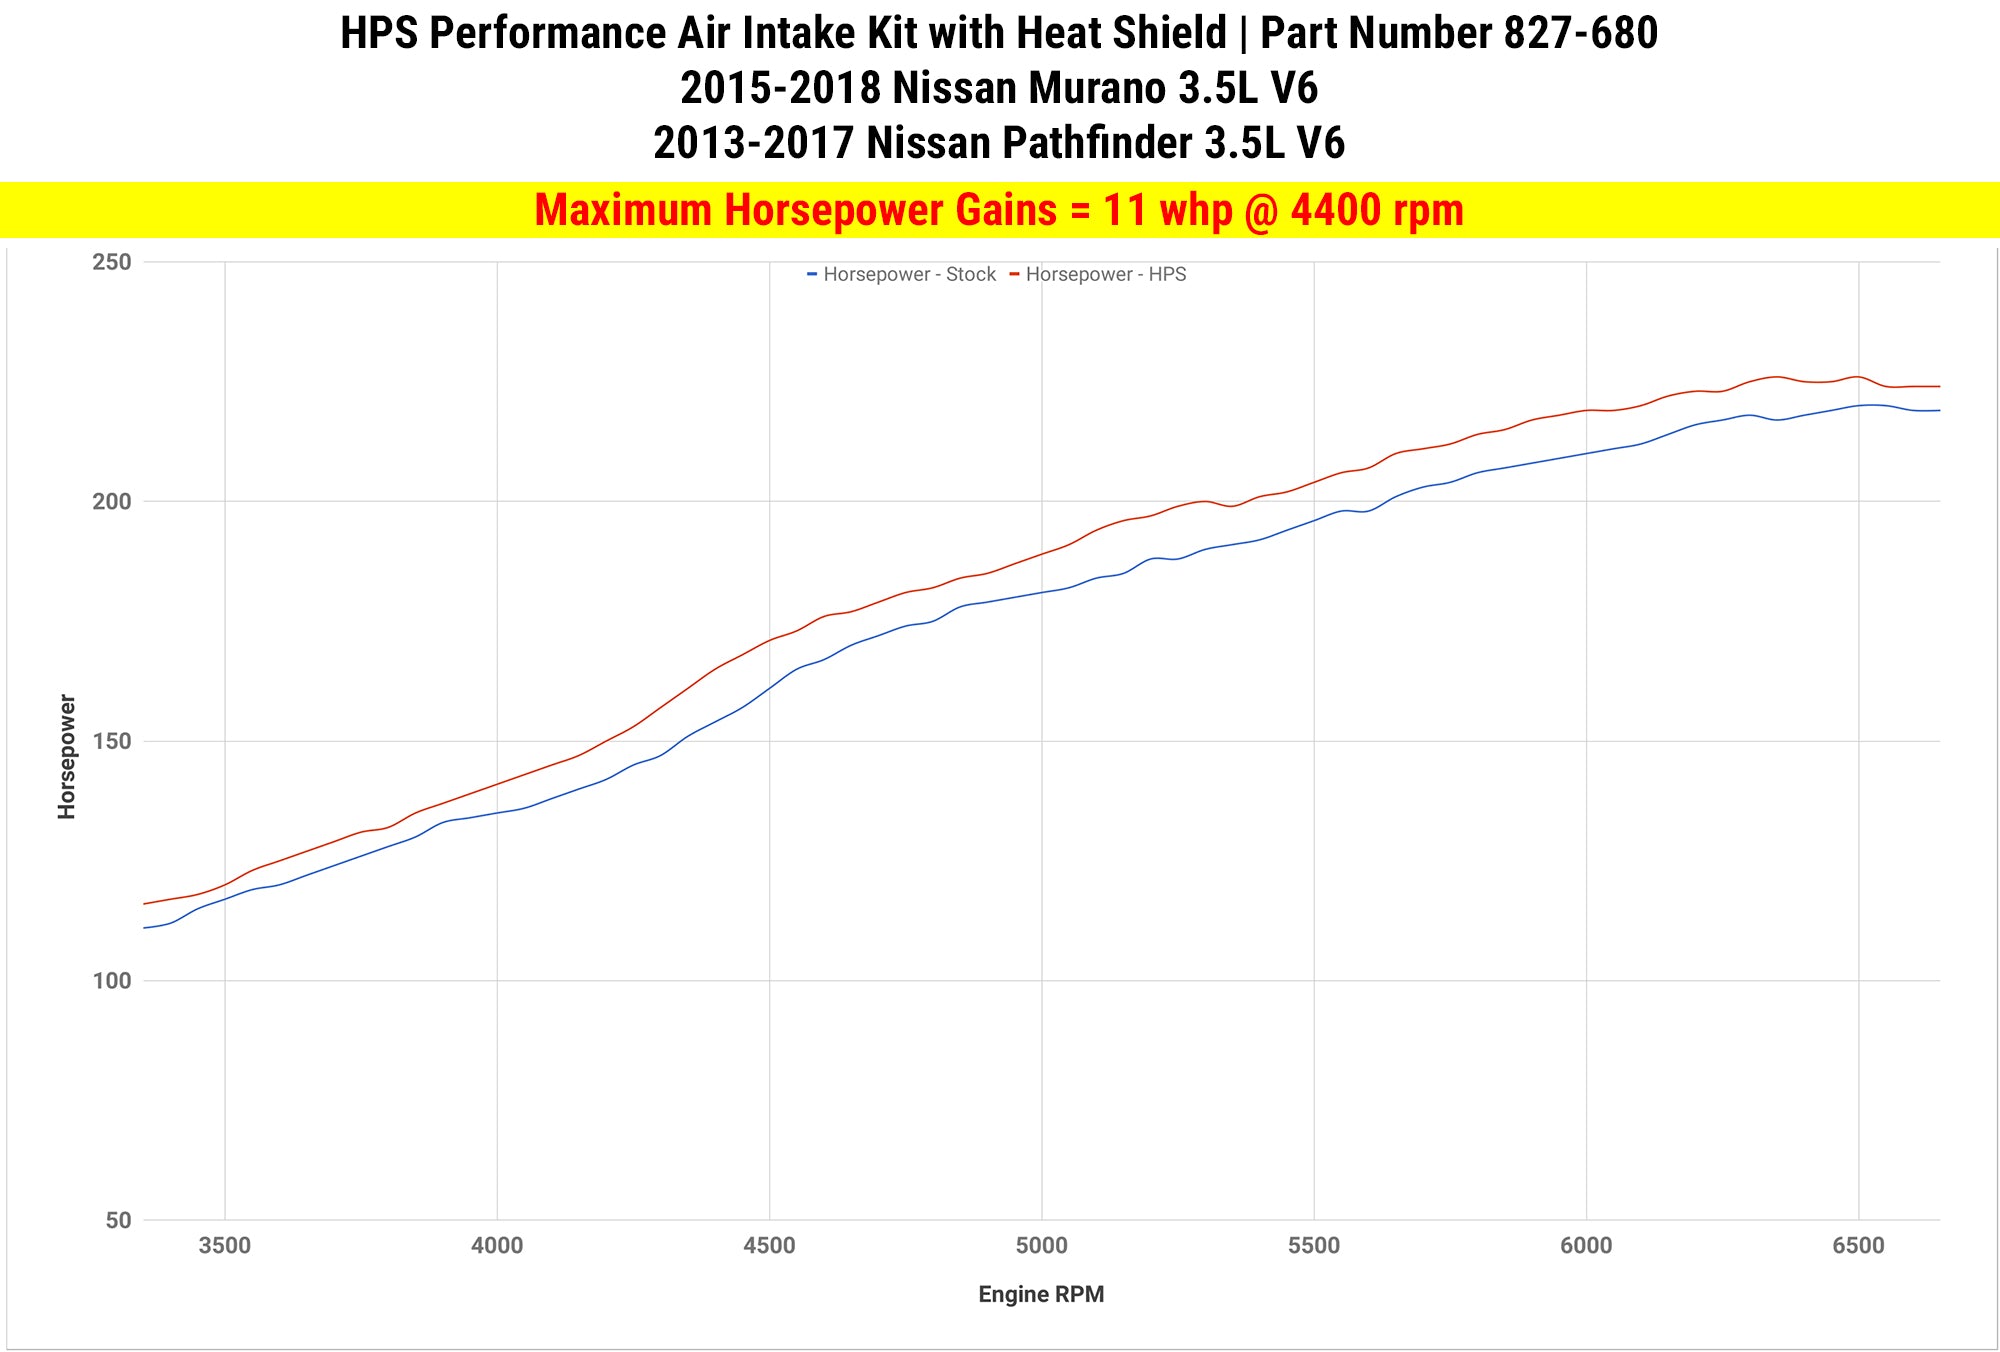 Dyno proven gains 11 whp HPS Performance Shortram Air Intake Kit 2013-2017 Nissan Pathfinder 3.5L V6 827-680R